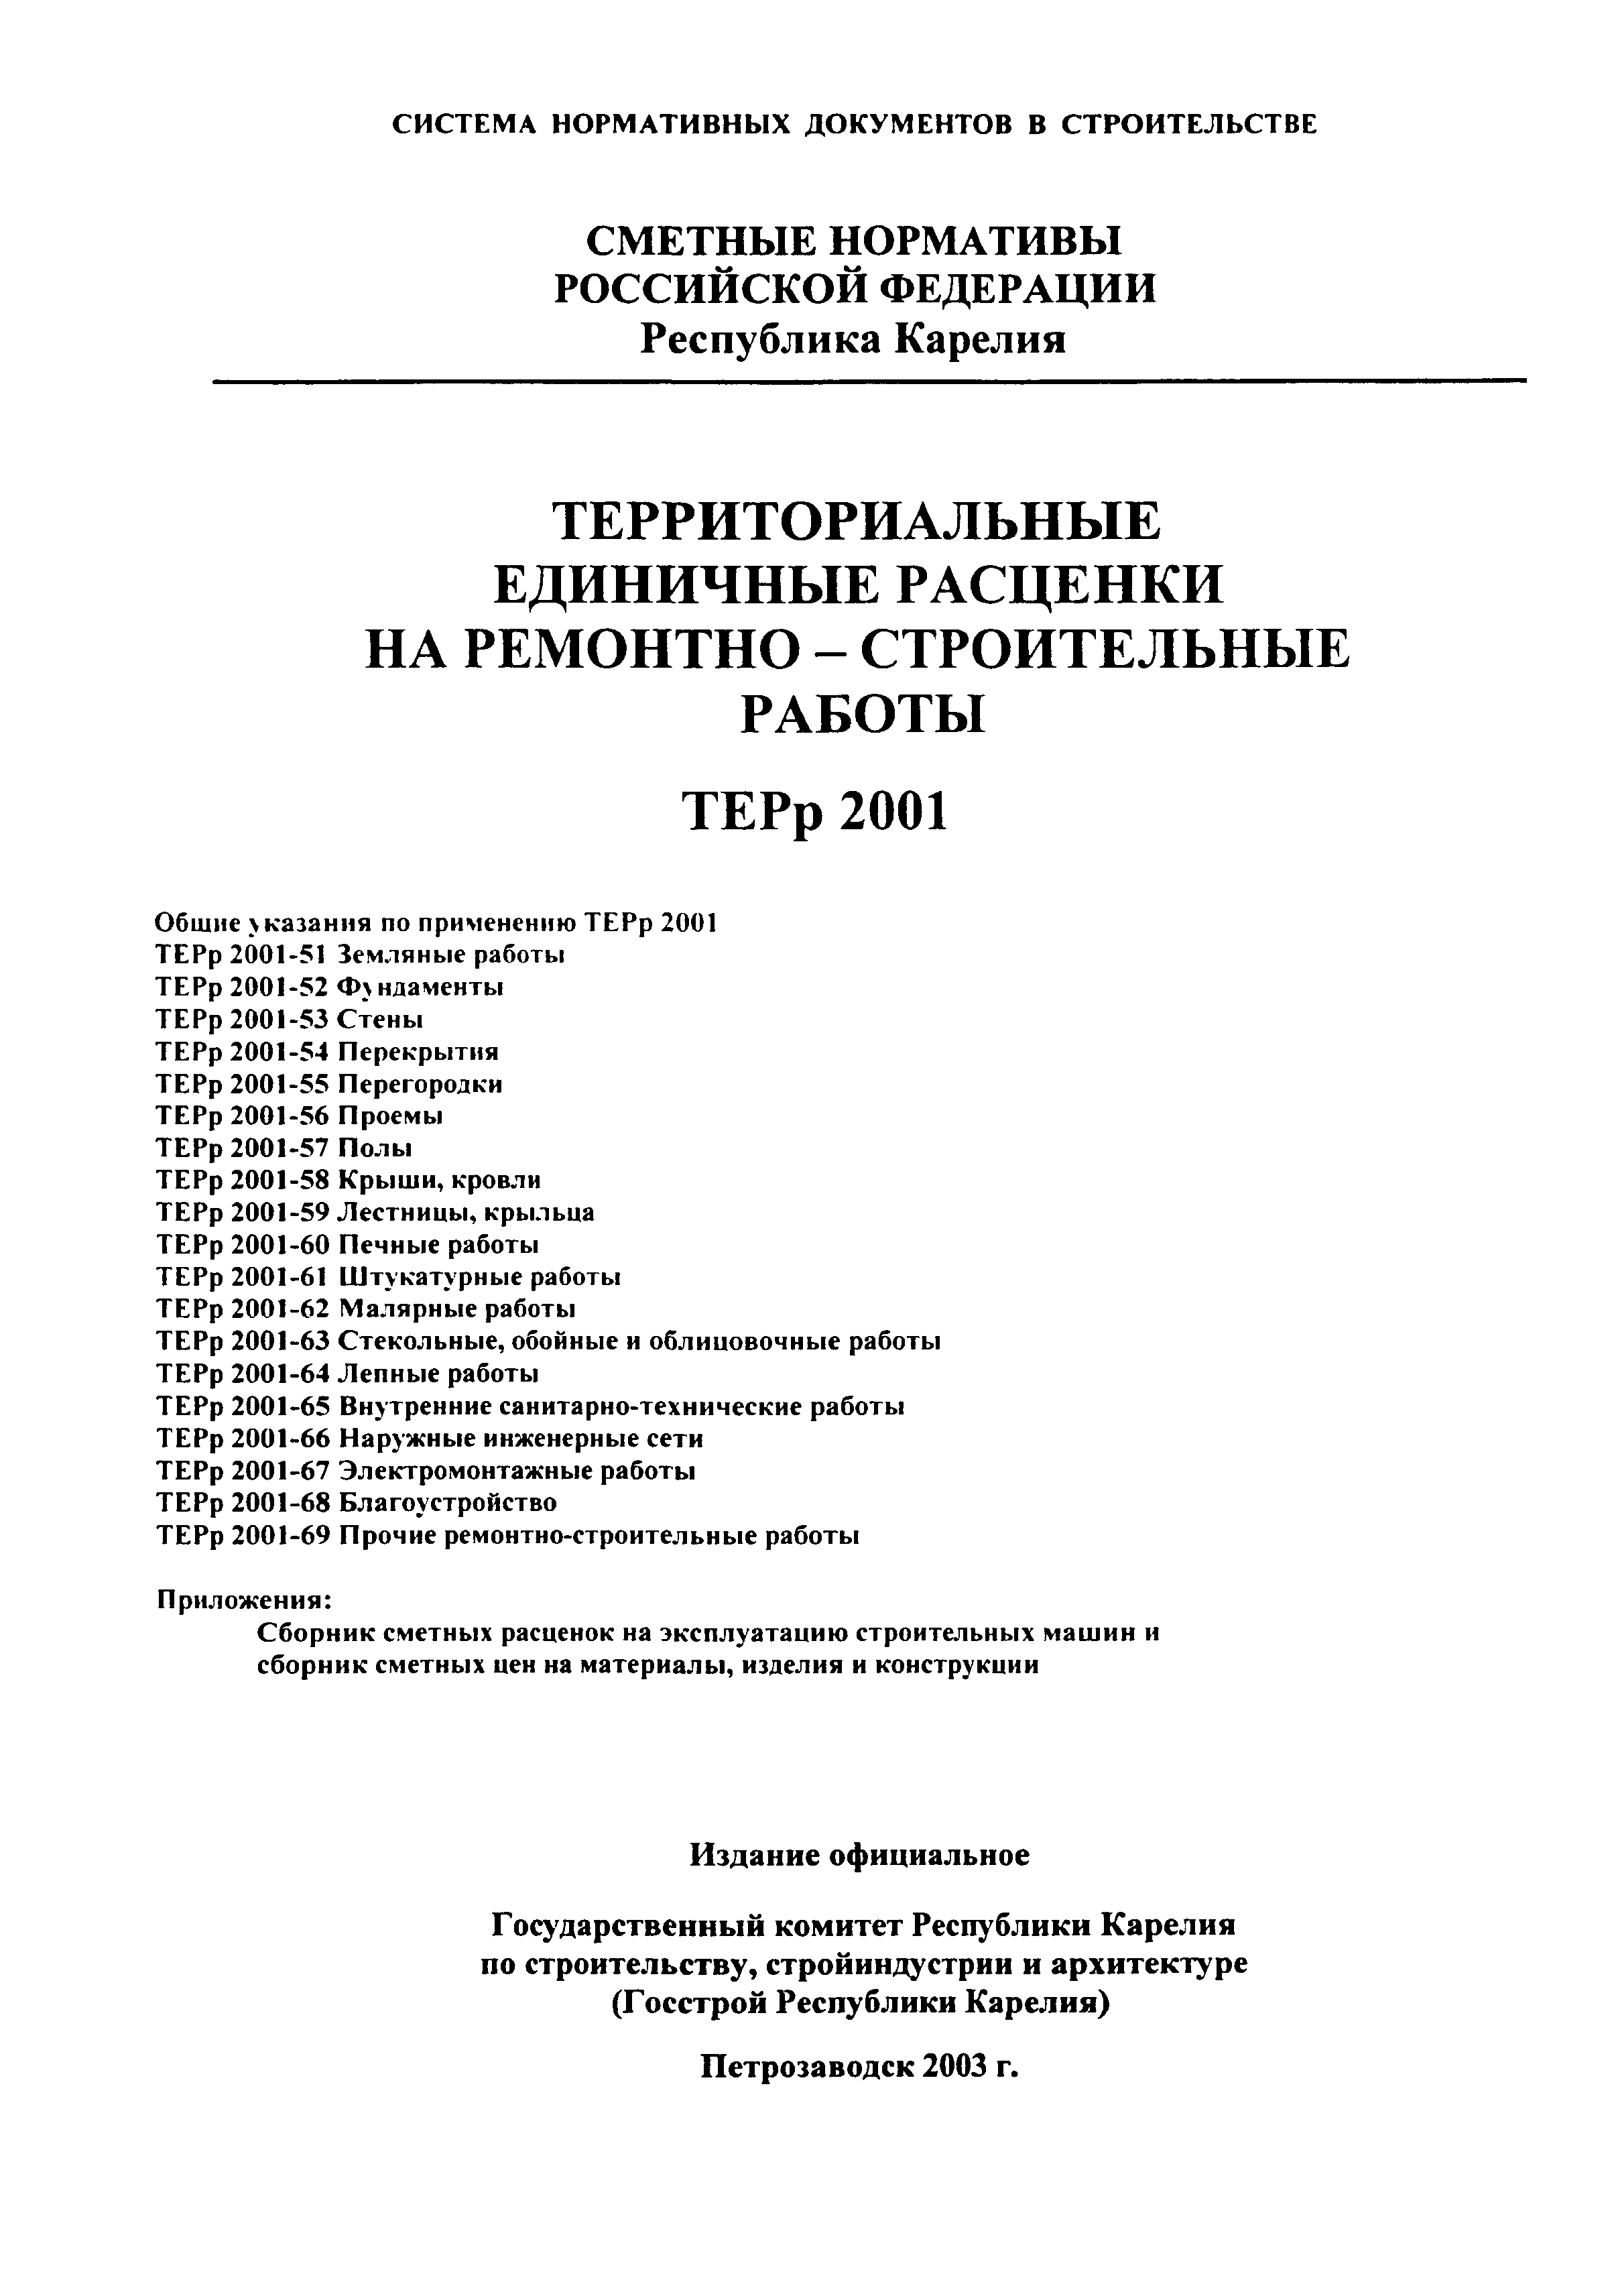 ТЕРр Республика Карелия 2001-56